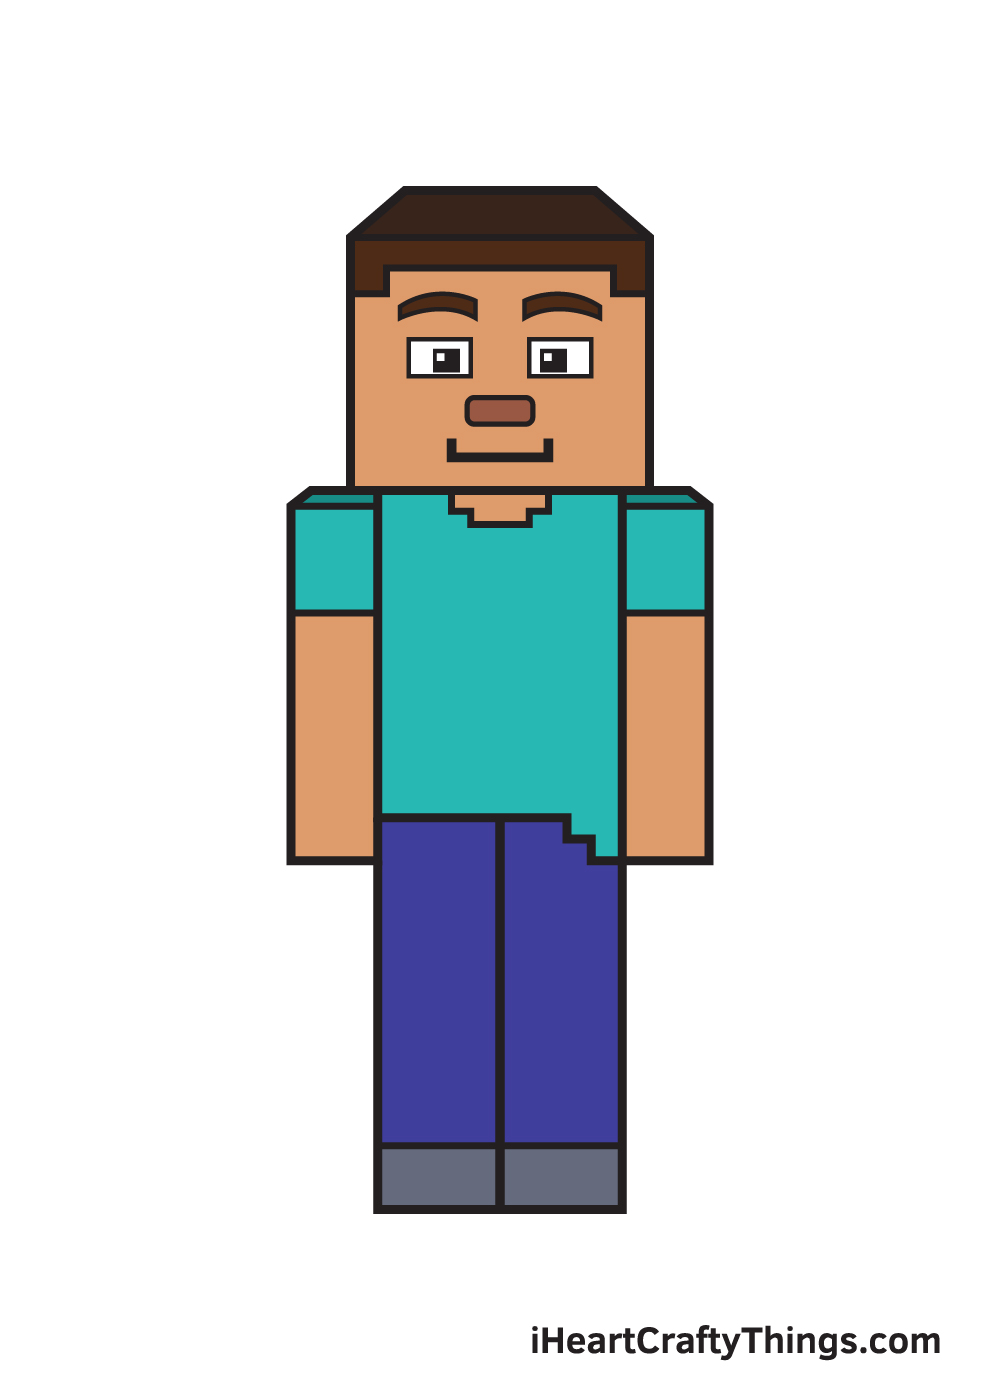 Minecraft Character Drawing Sheets - Steve - Creeper and Pig - Sub Art